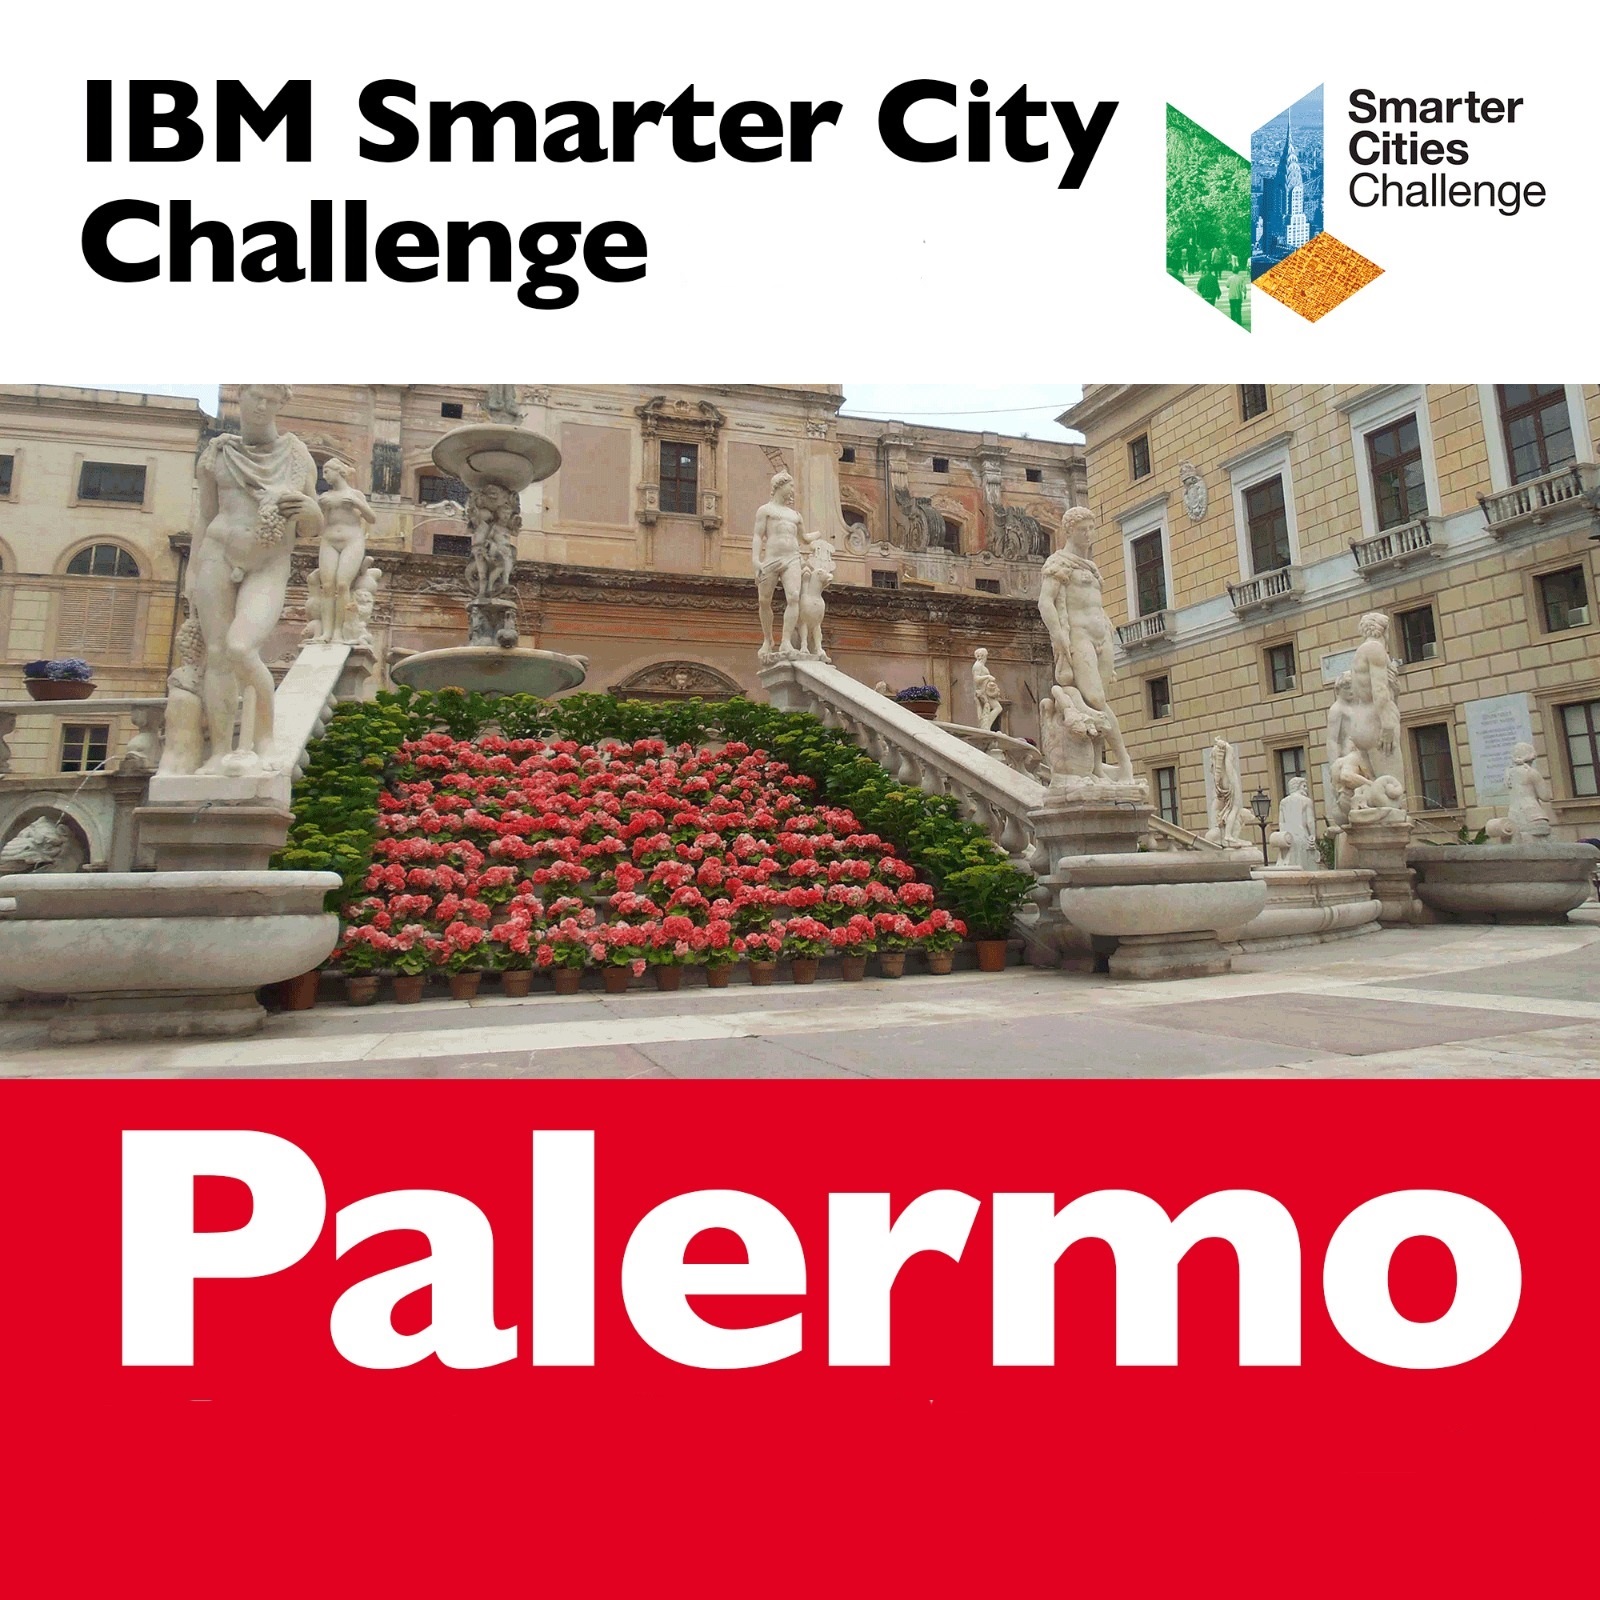  Smarter Cities Challenge - Lunedì 30 ottobre conferenza stampa 